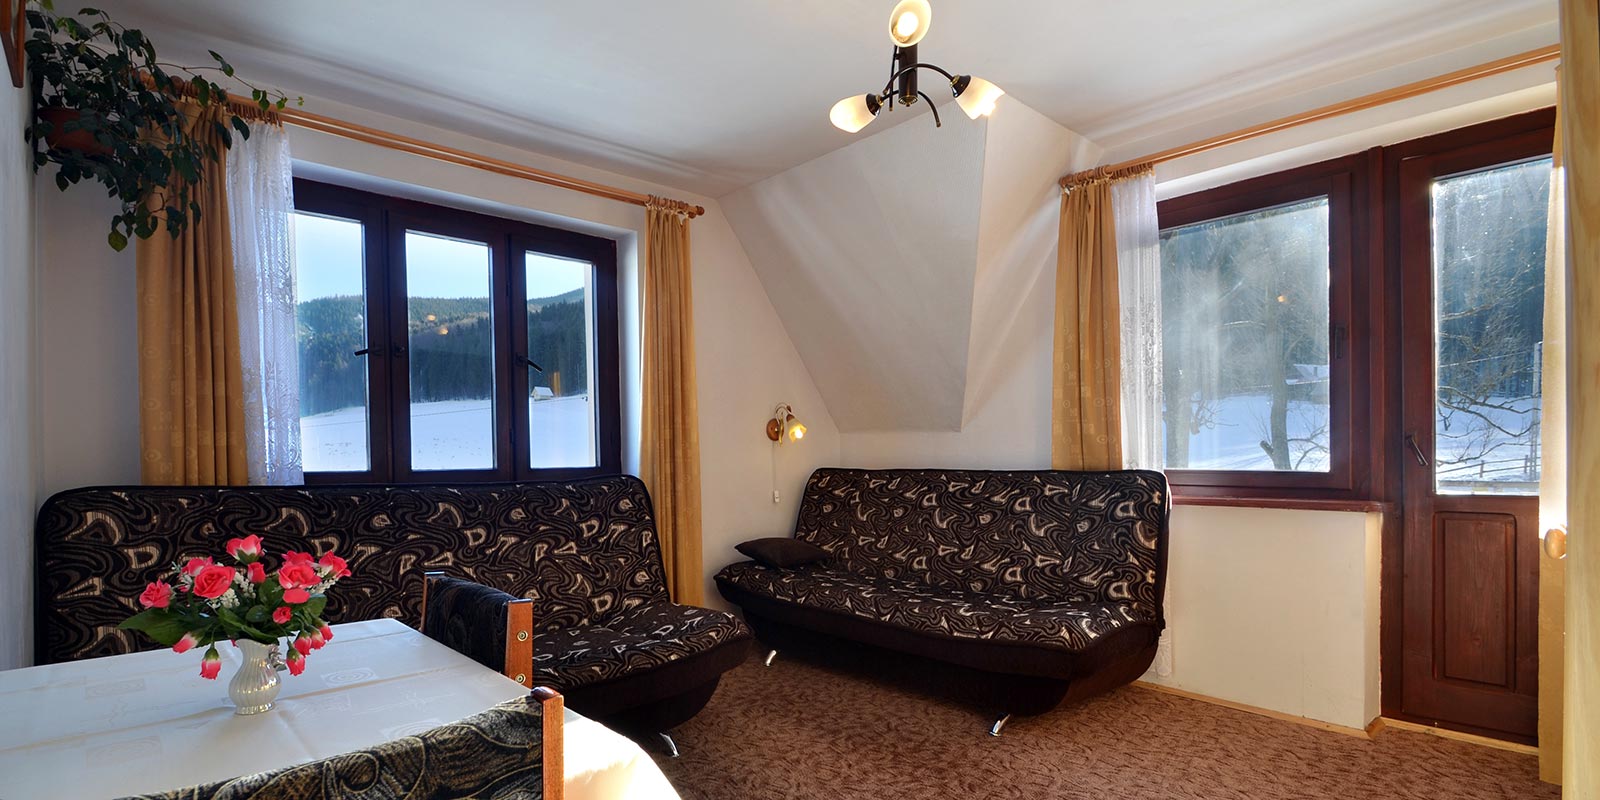 U LISA villa in Zakopane rooms for rent Poland Tatra Mountains 04